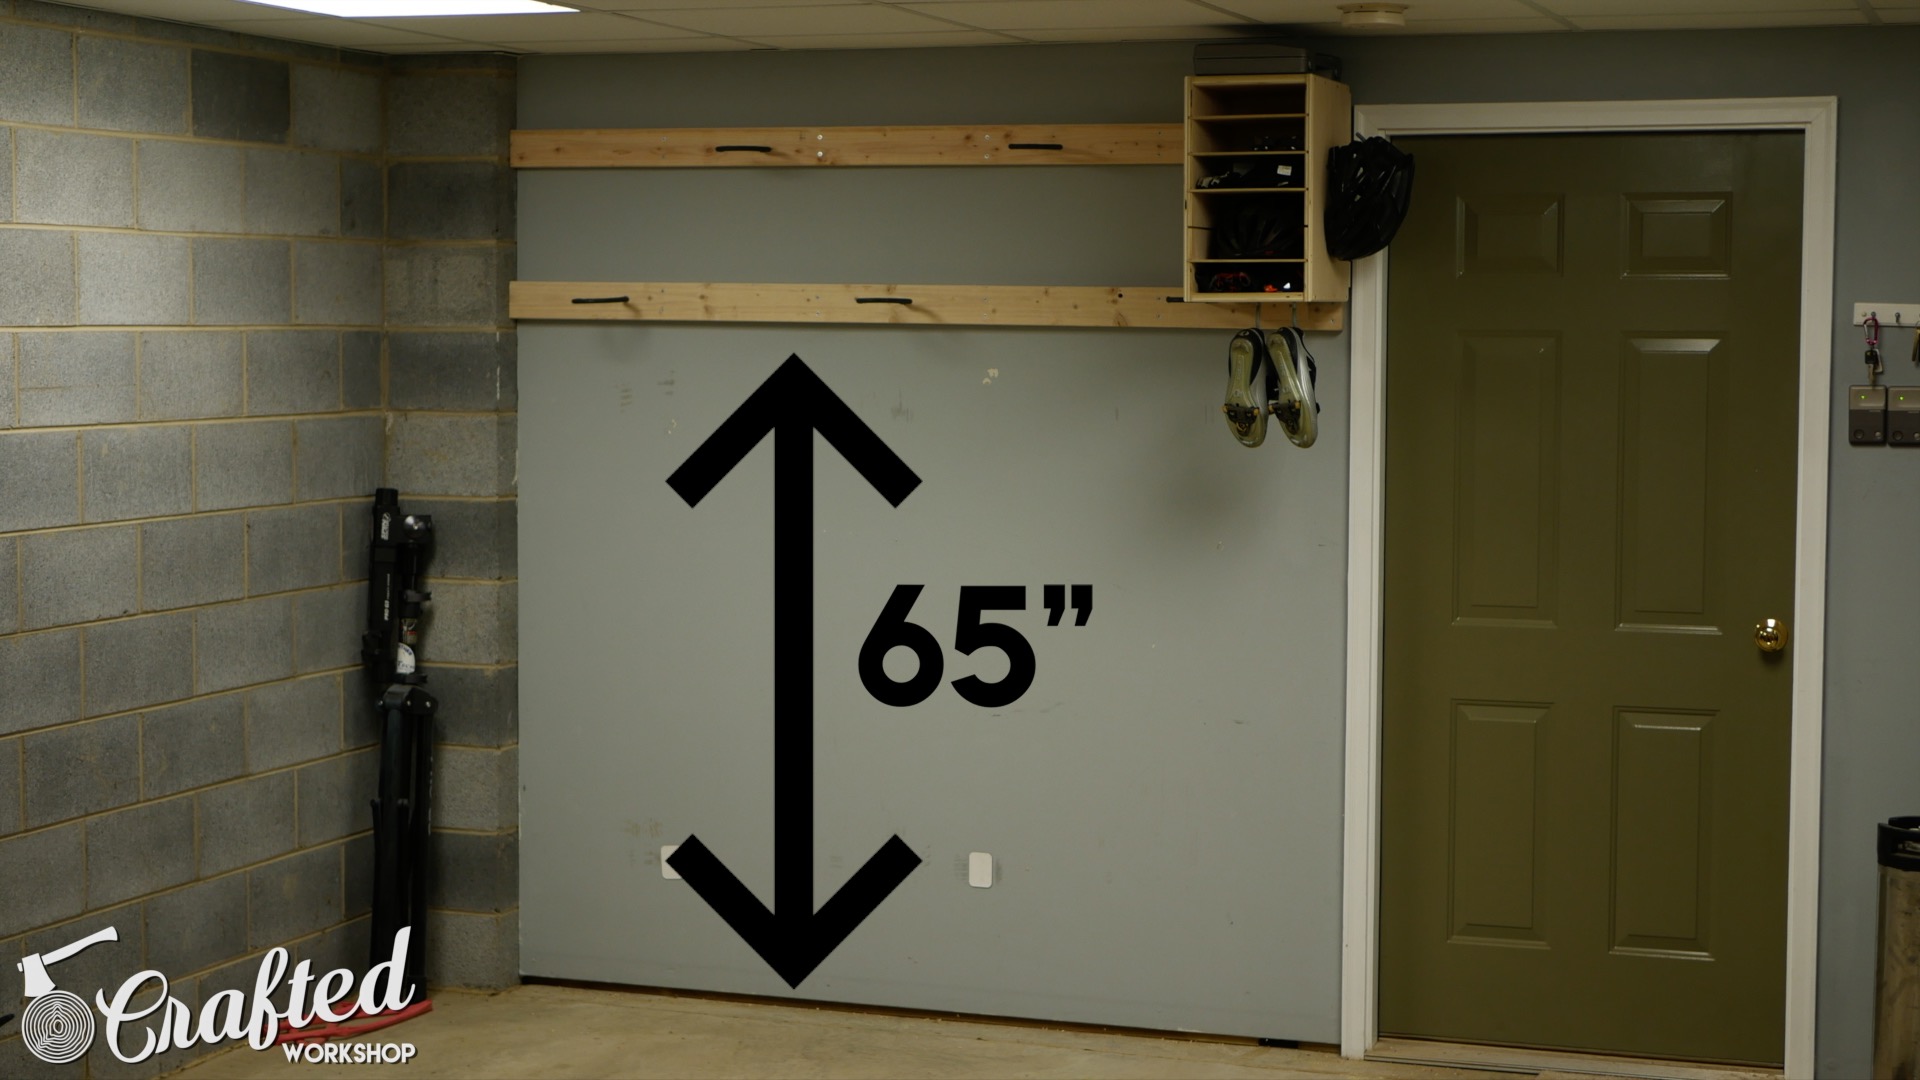 DIY Bike Rack for $20 / Bike Storage Stand & Cabinet for Garage